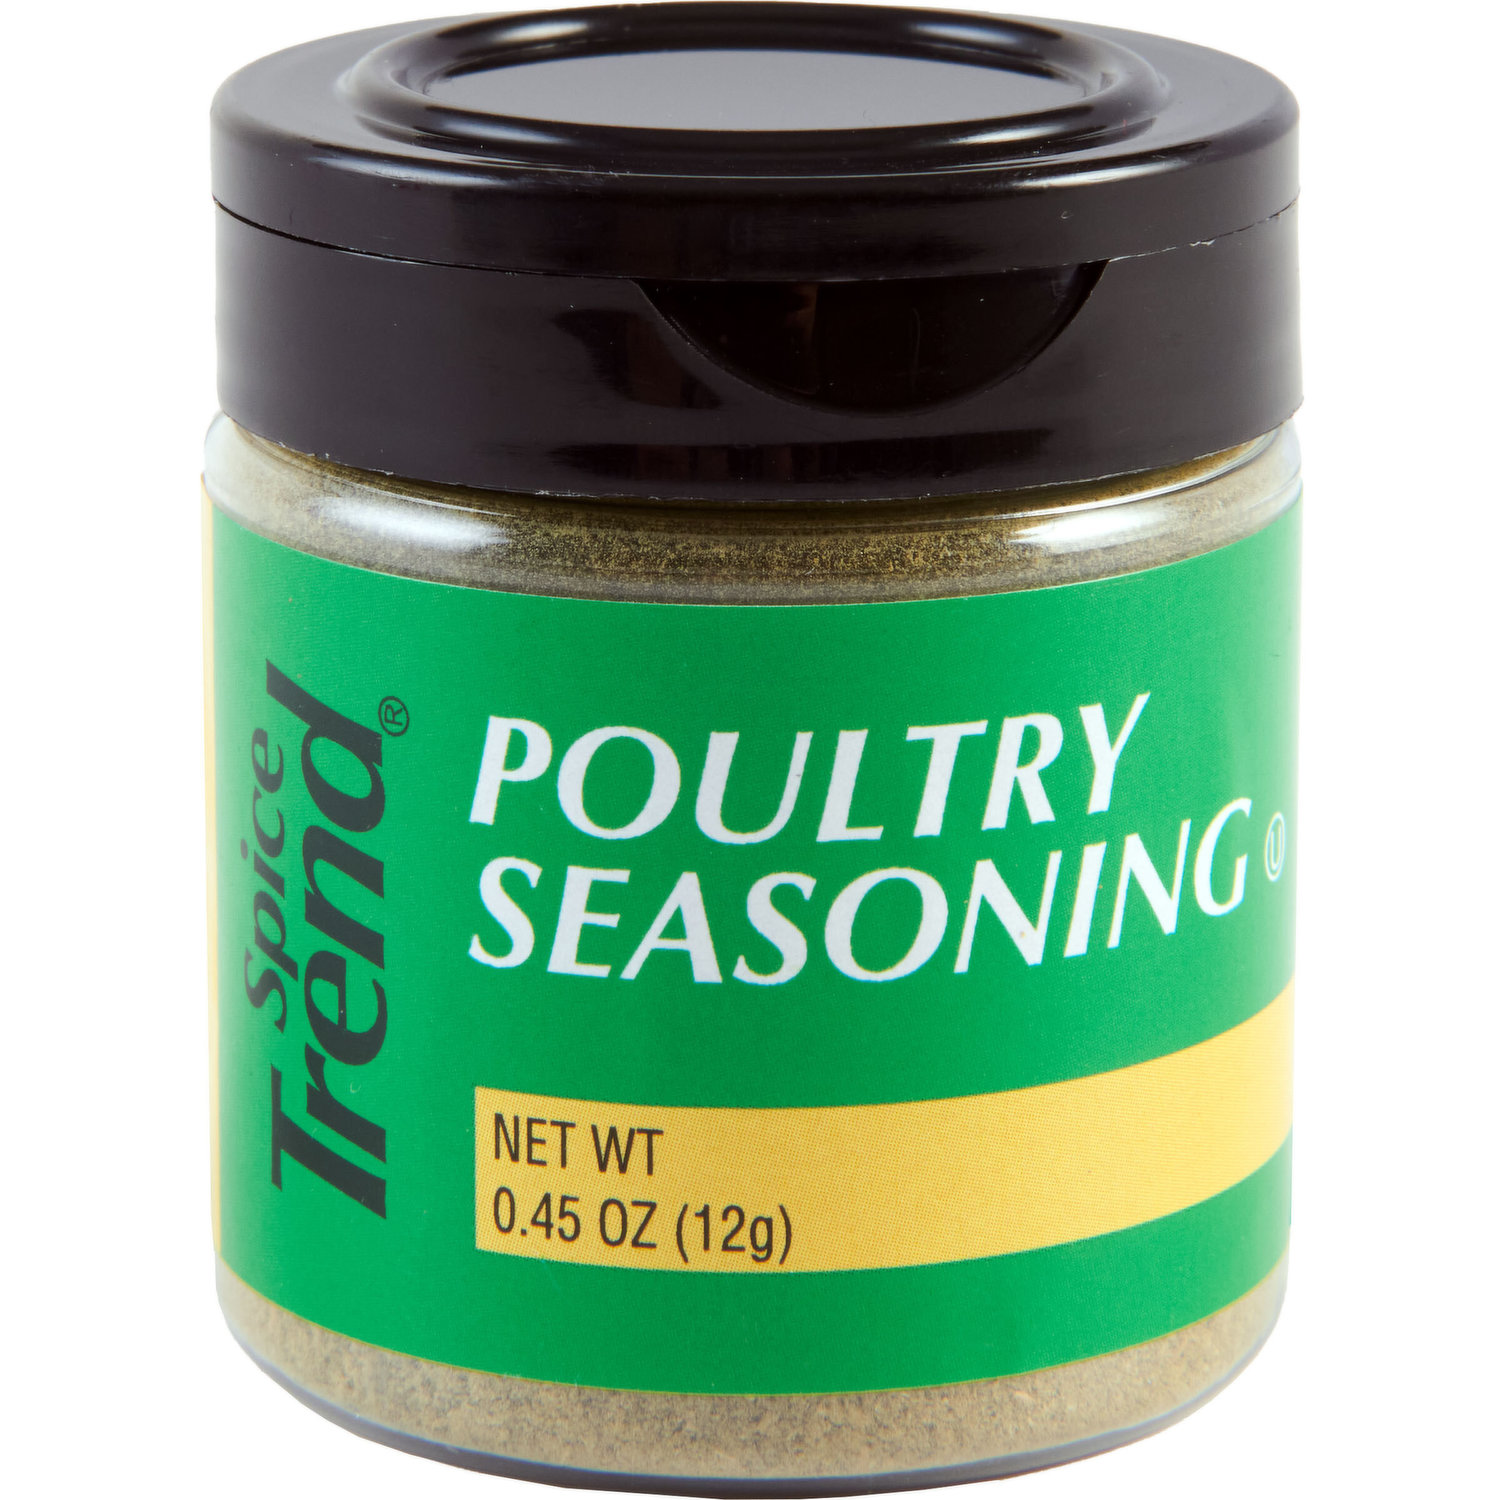 McCormick® Poultry Seasoning